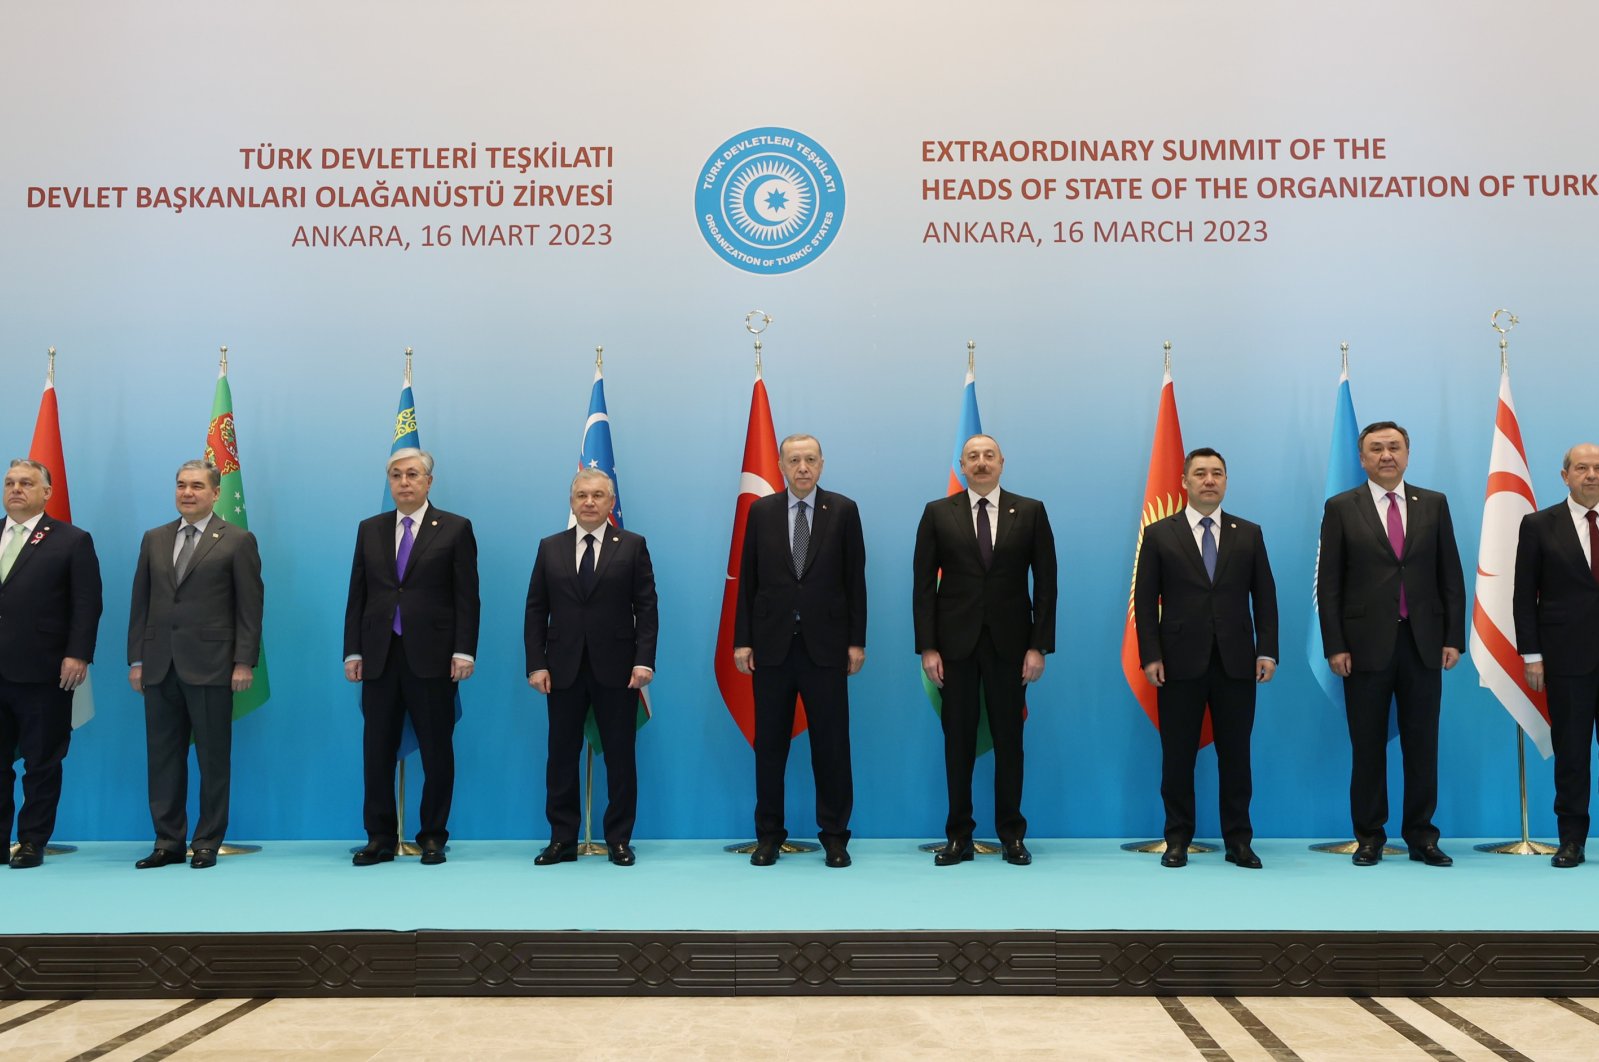 Leaders of the Organization of Turkic States (OTS), from left to right, Hungarian Prime Minister Viktor Orban, Chairperson of the People&#039;s Council of Turkmenistan Gurbanguly Berdymukhamedov, Kazakstan’s President Kassym-Jomart Tokayev, Uzbekistan’s President Shavkat Mirziyoyev, President Recep Tayyip Erdoğan, Azerbaijani President Ilham Aliyev, Kyrgyzstan’s President Sadyr Zhaparov, Secretary-General of the OTS Kubanychbek Omuraliev and Turkish Republic of Northern Cyprus (TRNC) President Ersin Tatar pose for a group photo at the OTS’s extraordinary summit in Ankara, Türkiye, March 16, 2023. (AA Photo)